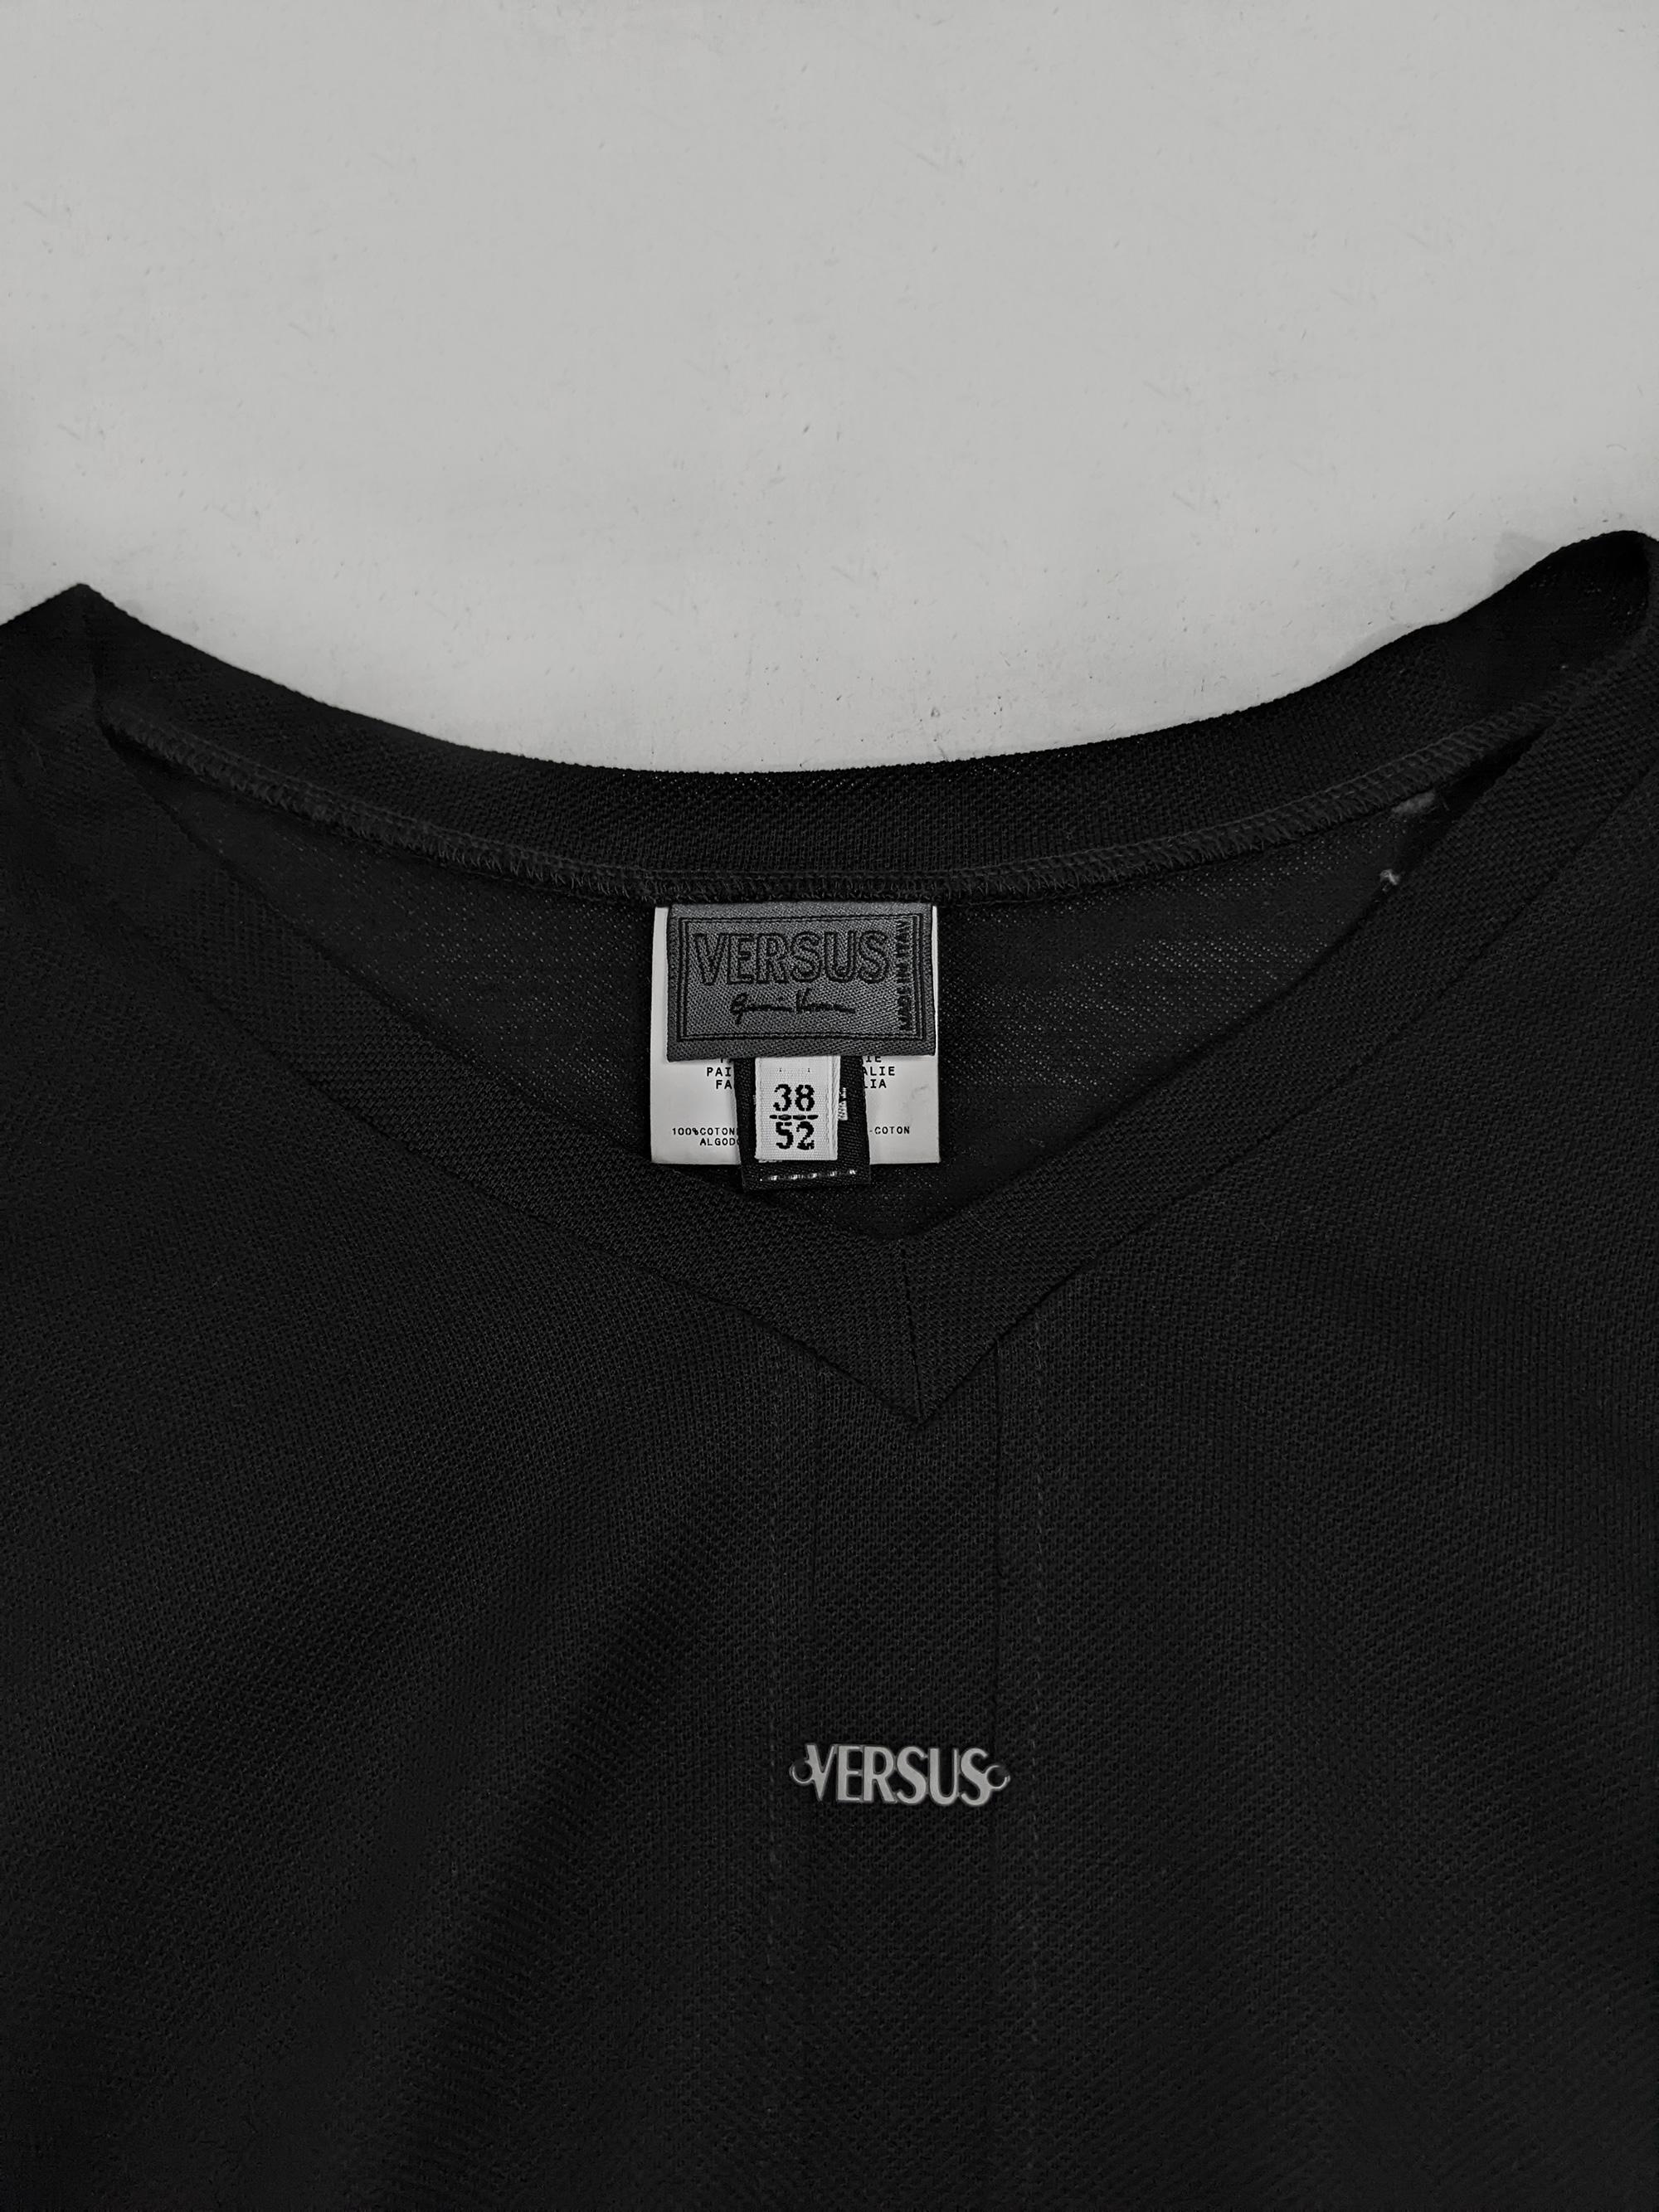 Versus Versace Vintage 2000s Black Mesh Shirt Long Sleeve Top Y2K Party Shirt For Sale 3